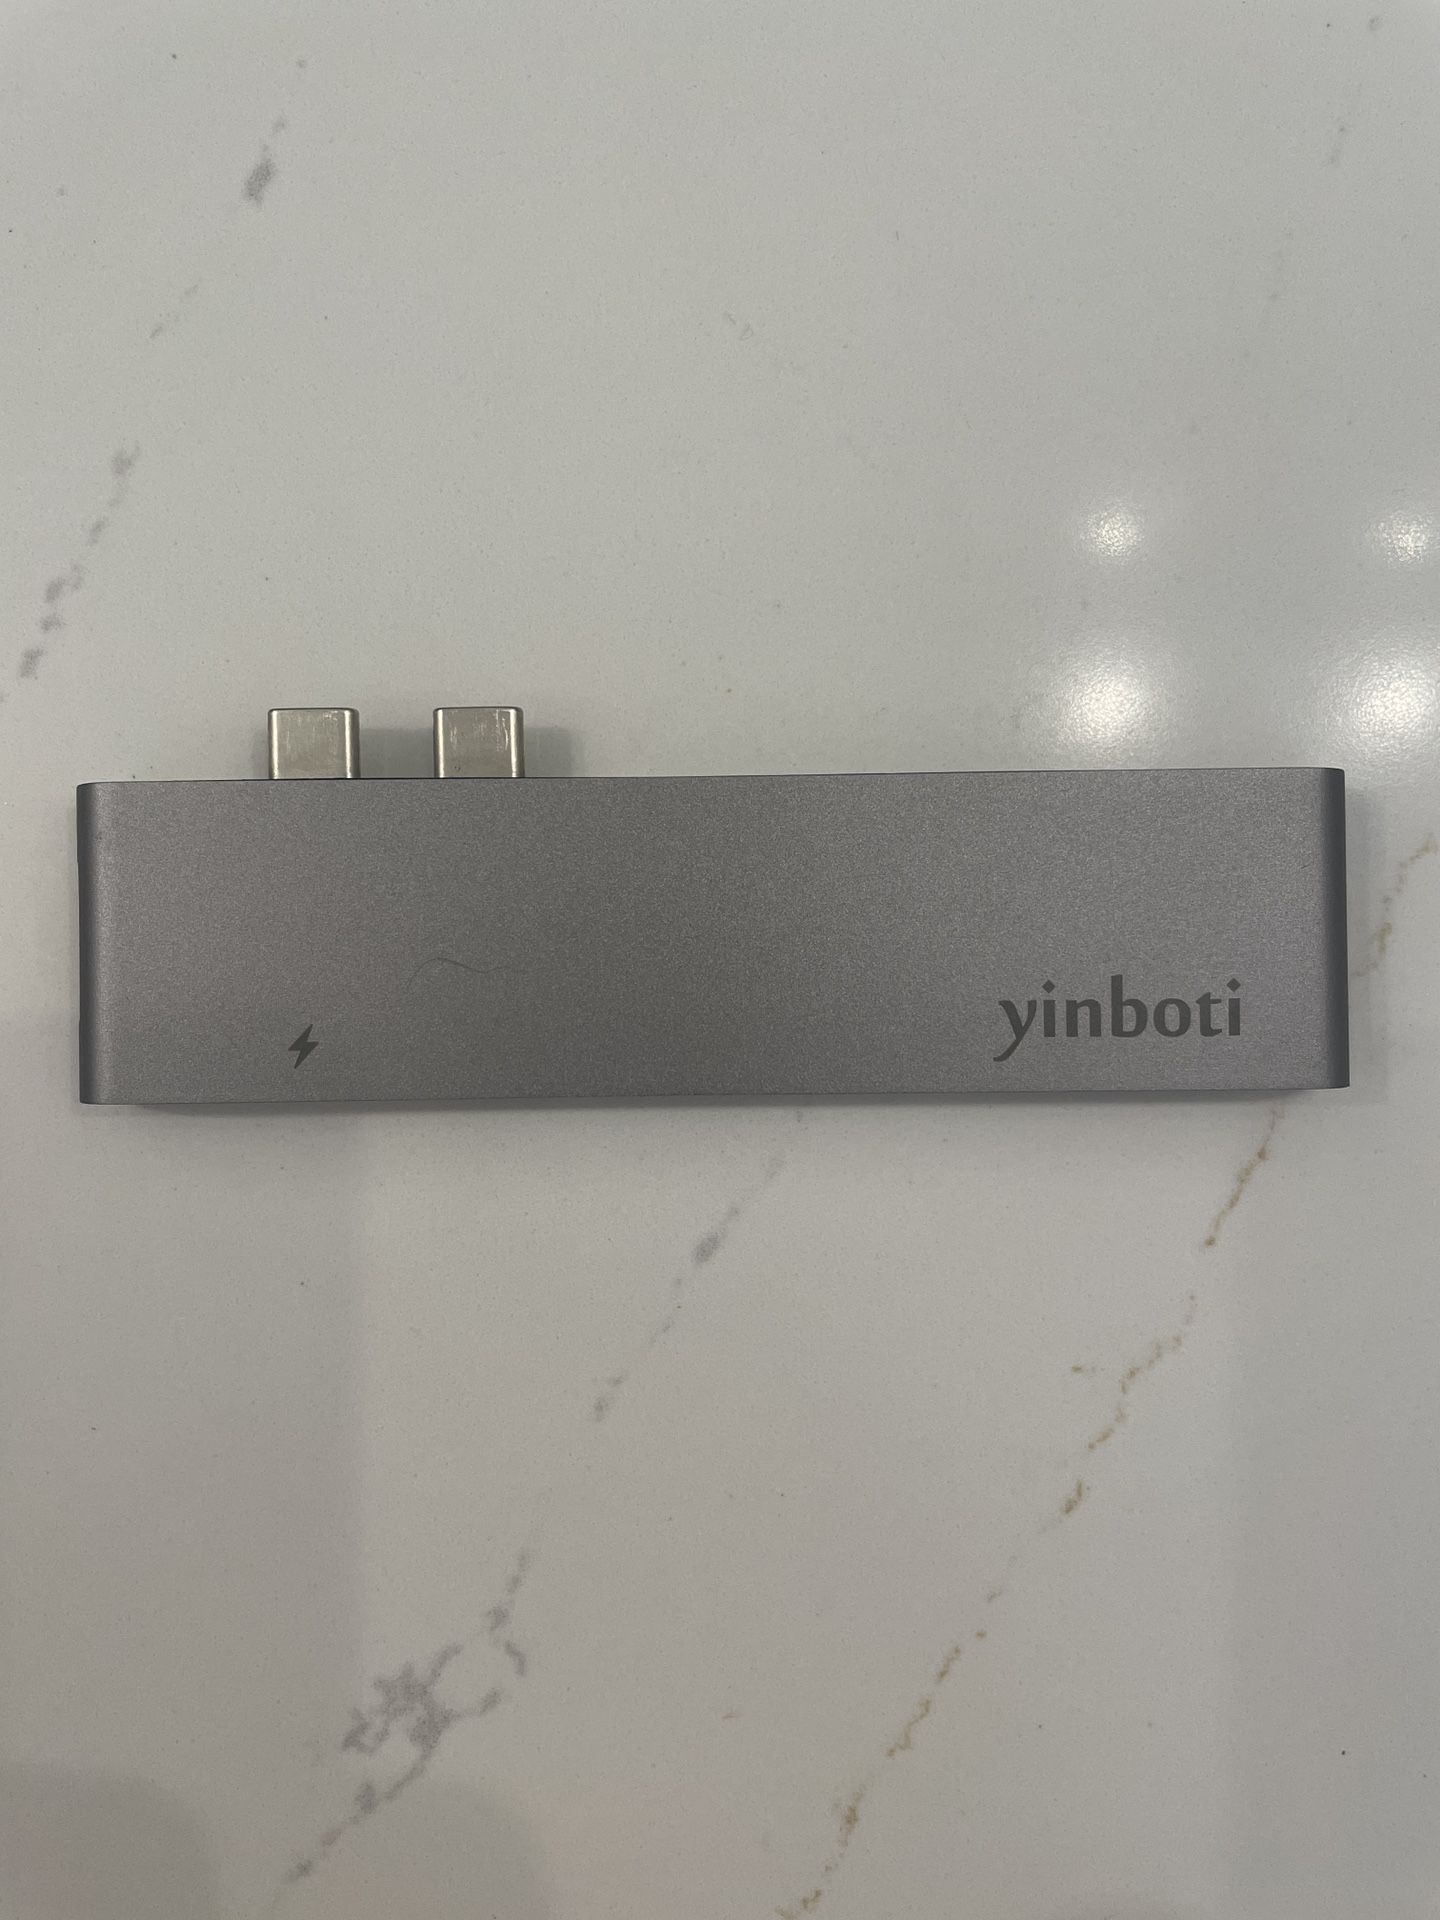 Yinboti MacBook USB-C Adapter Port Adapter